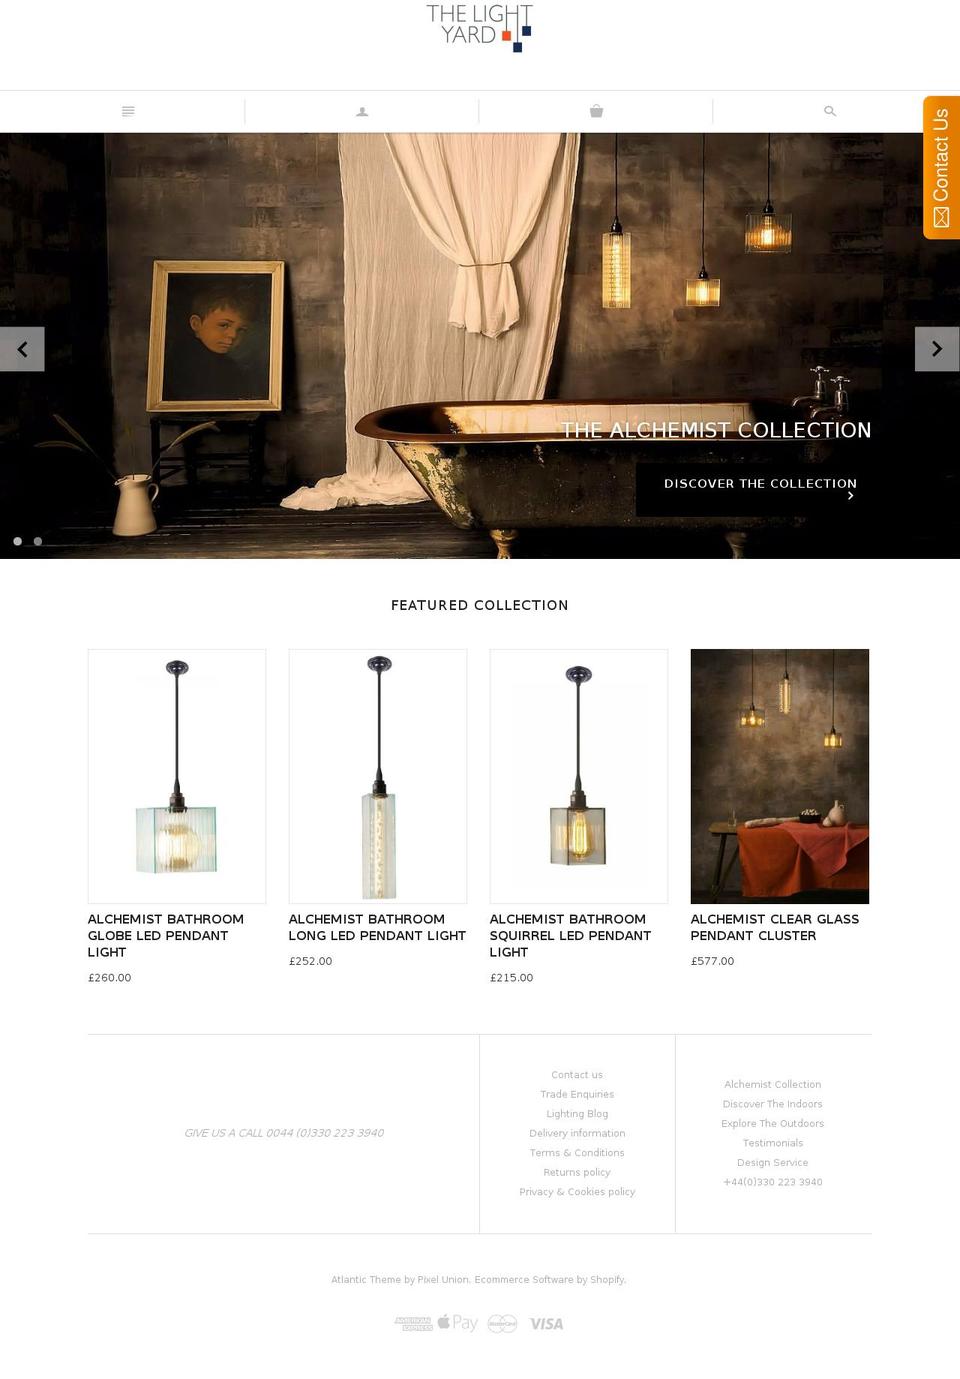 thelightyard.com shopify website screenshot